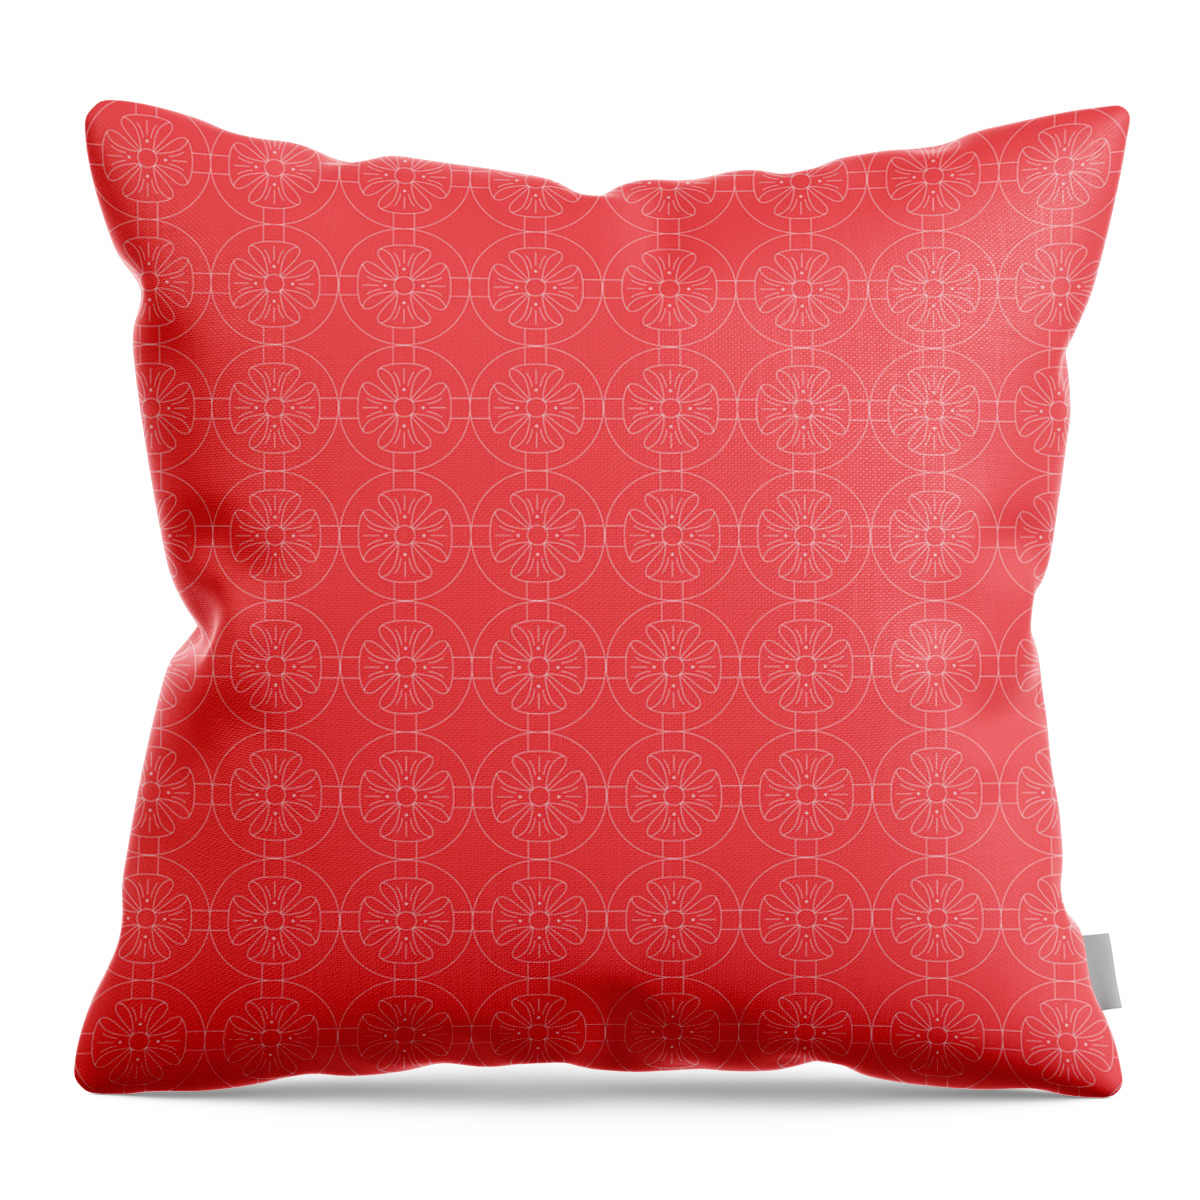 Pattern Throw Pillow featuring the digital art Vintage Cicular Ribbon Flower Pattern - Red by Studio Grafiikka